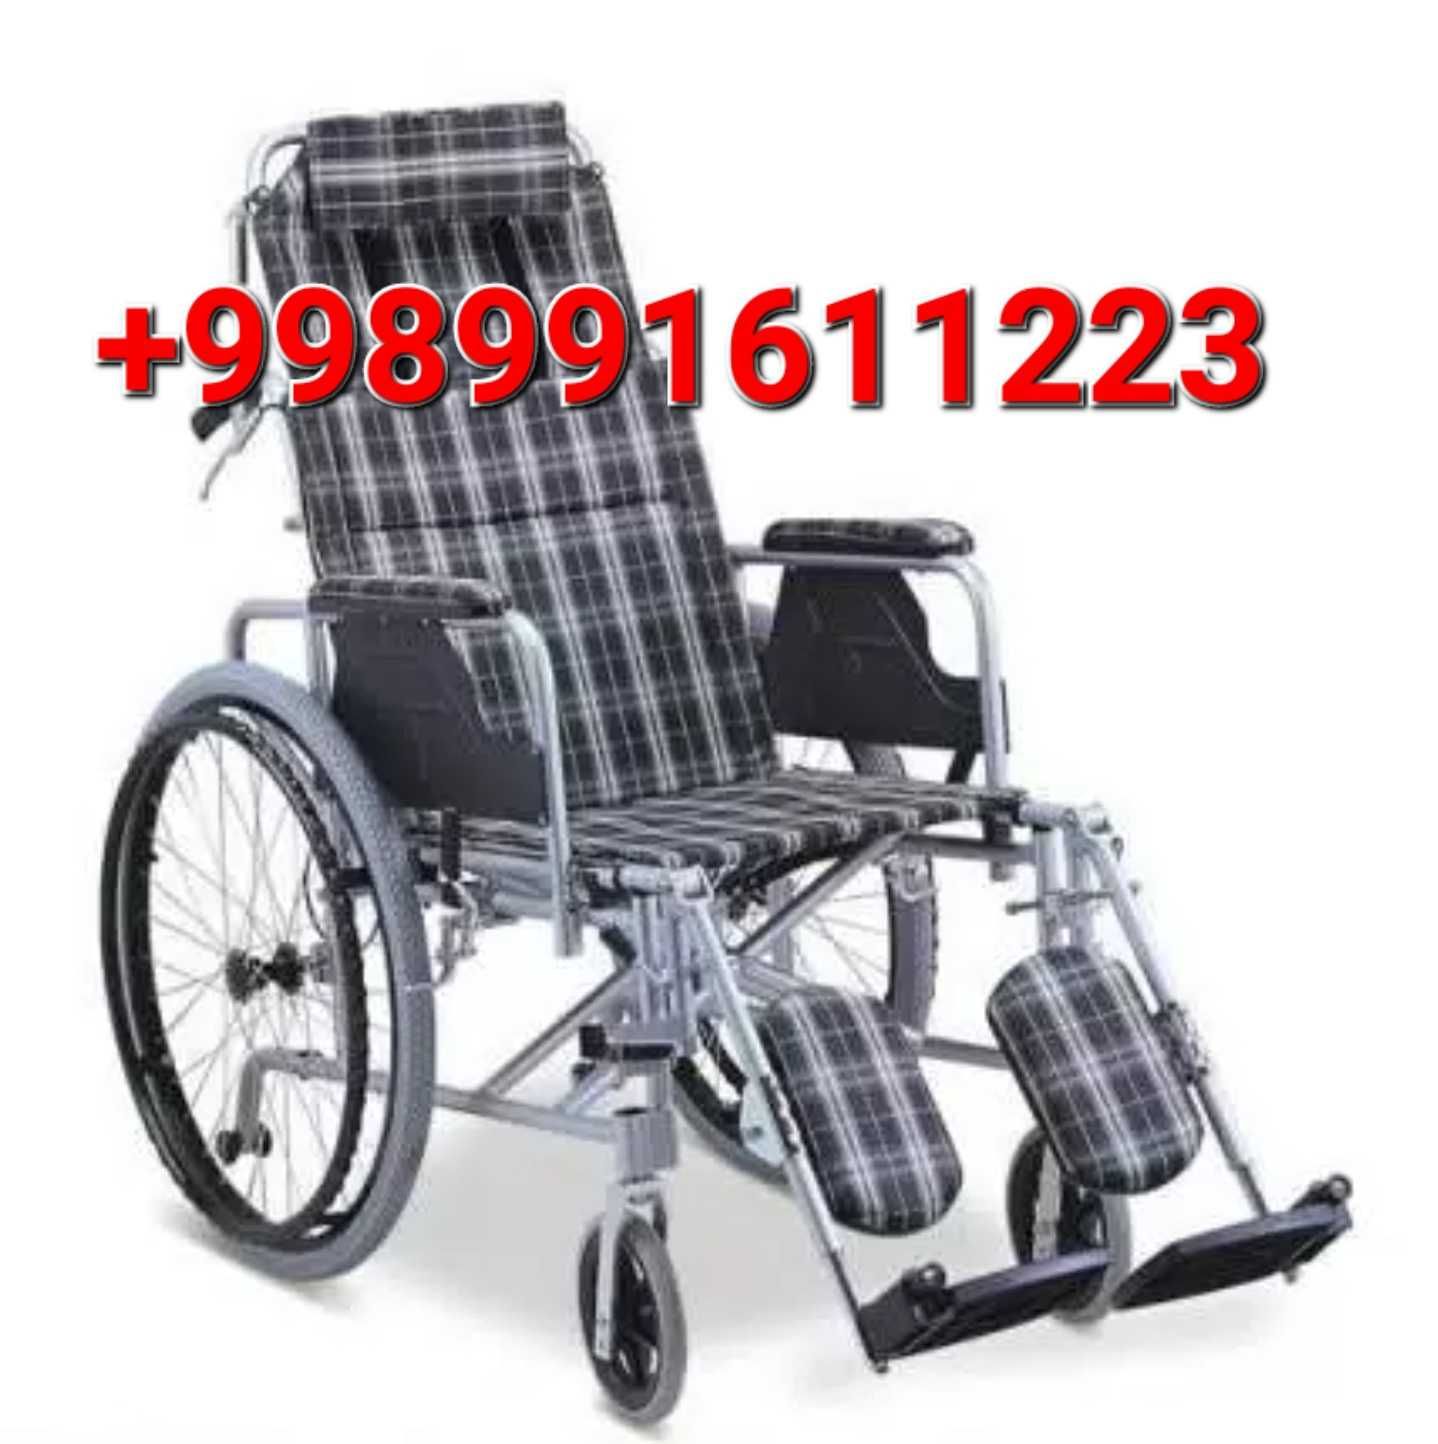 10:11
Nogironlar aravasi инвалидная коляска 
Инвалидные коляски